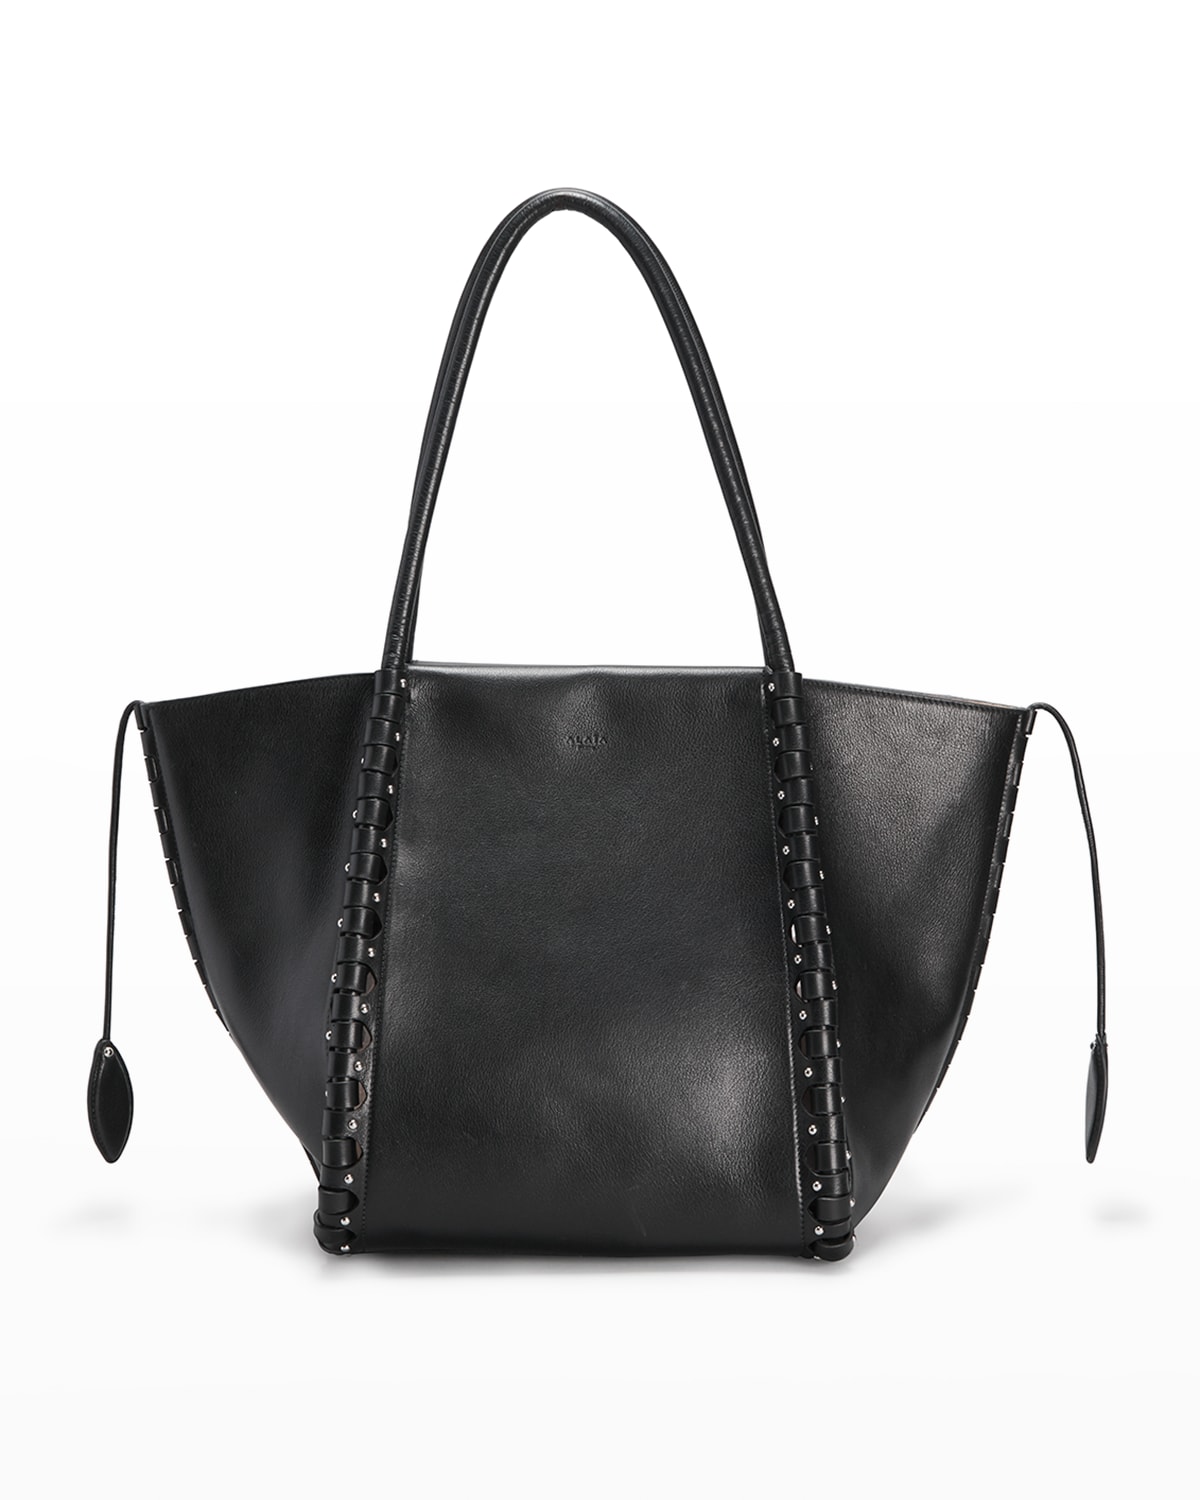 ALAÏA Bags On Sale, Up To 70% Off | ModeSens